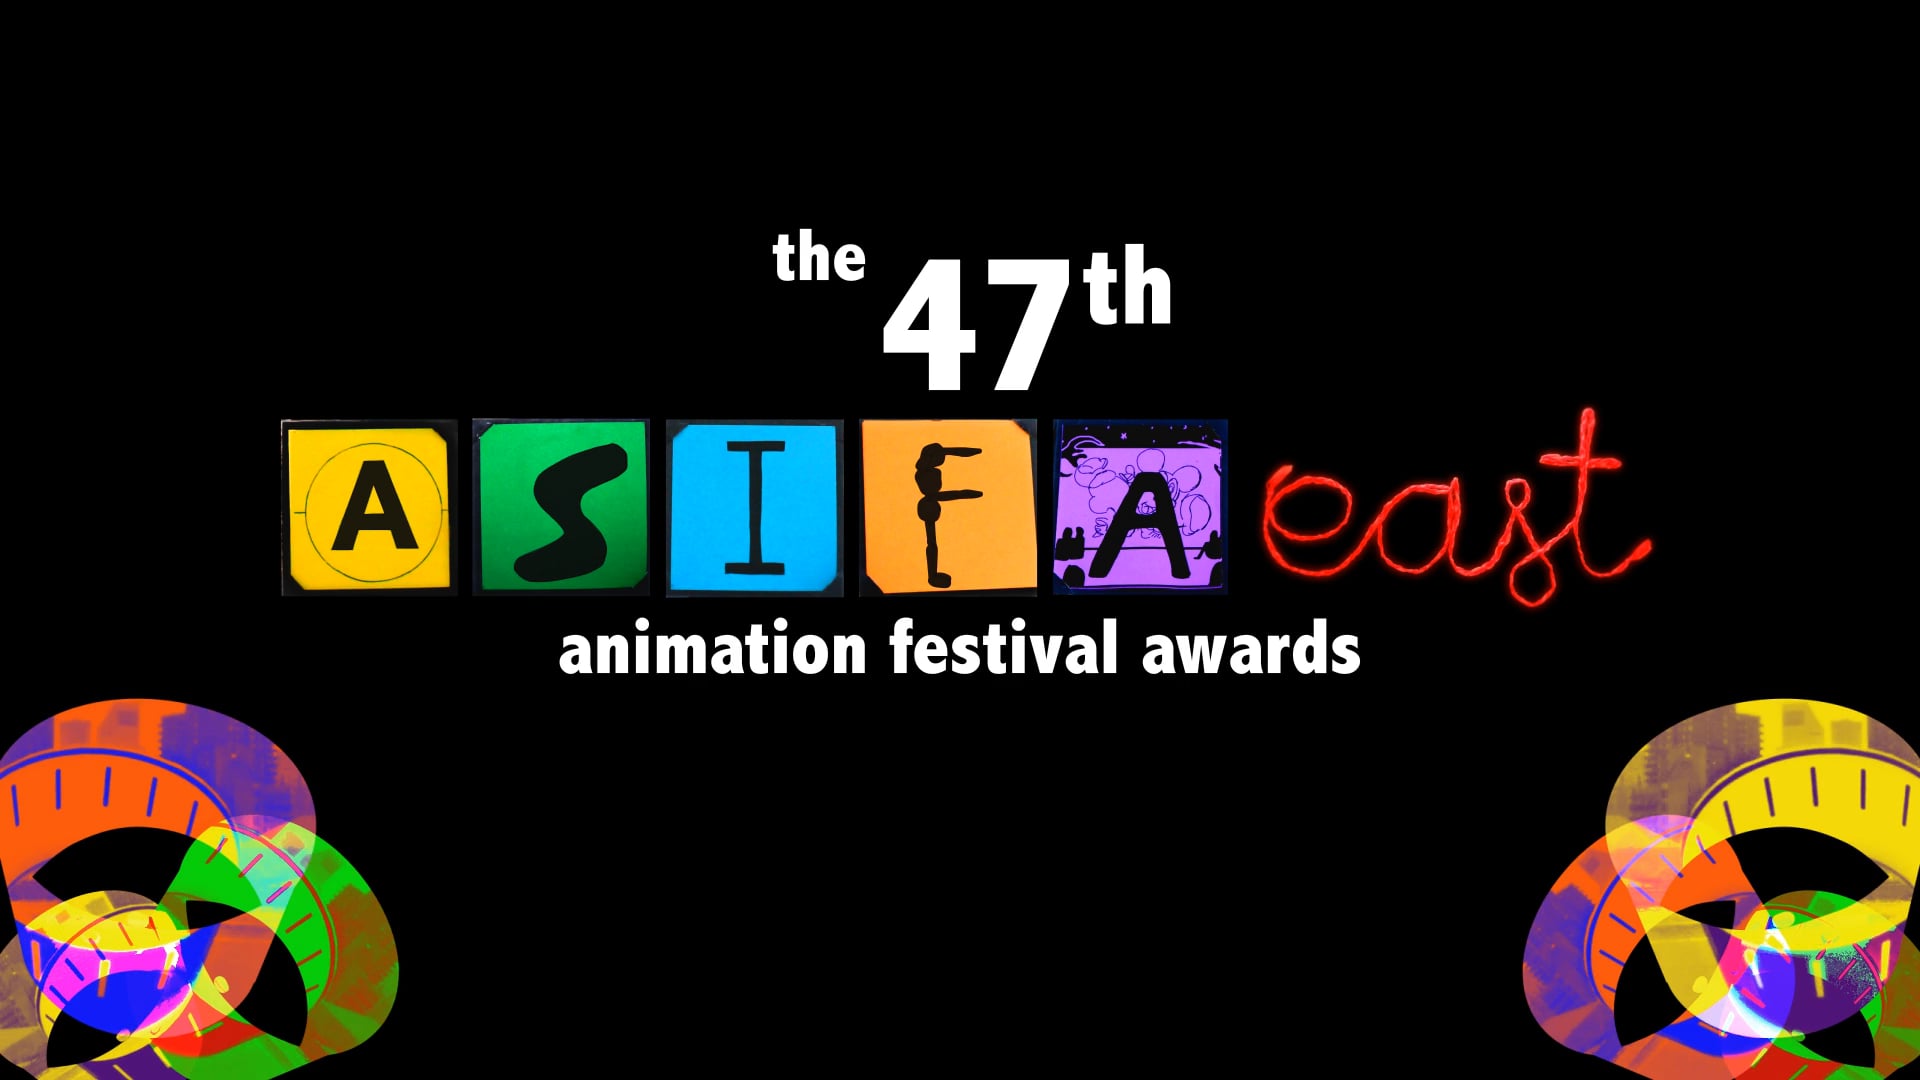 ASIFA-East Animation Awards Festival Signal Film 2016